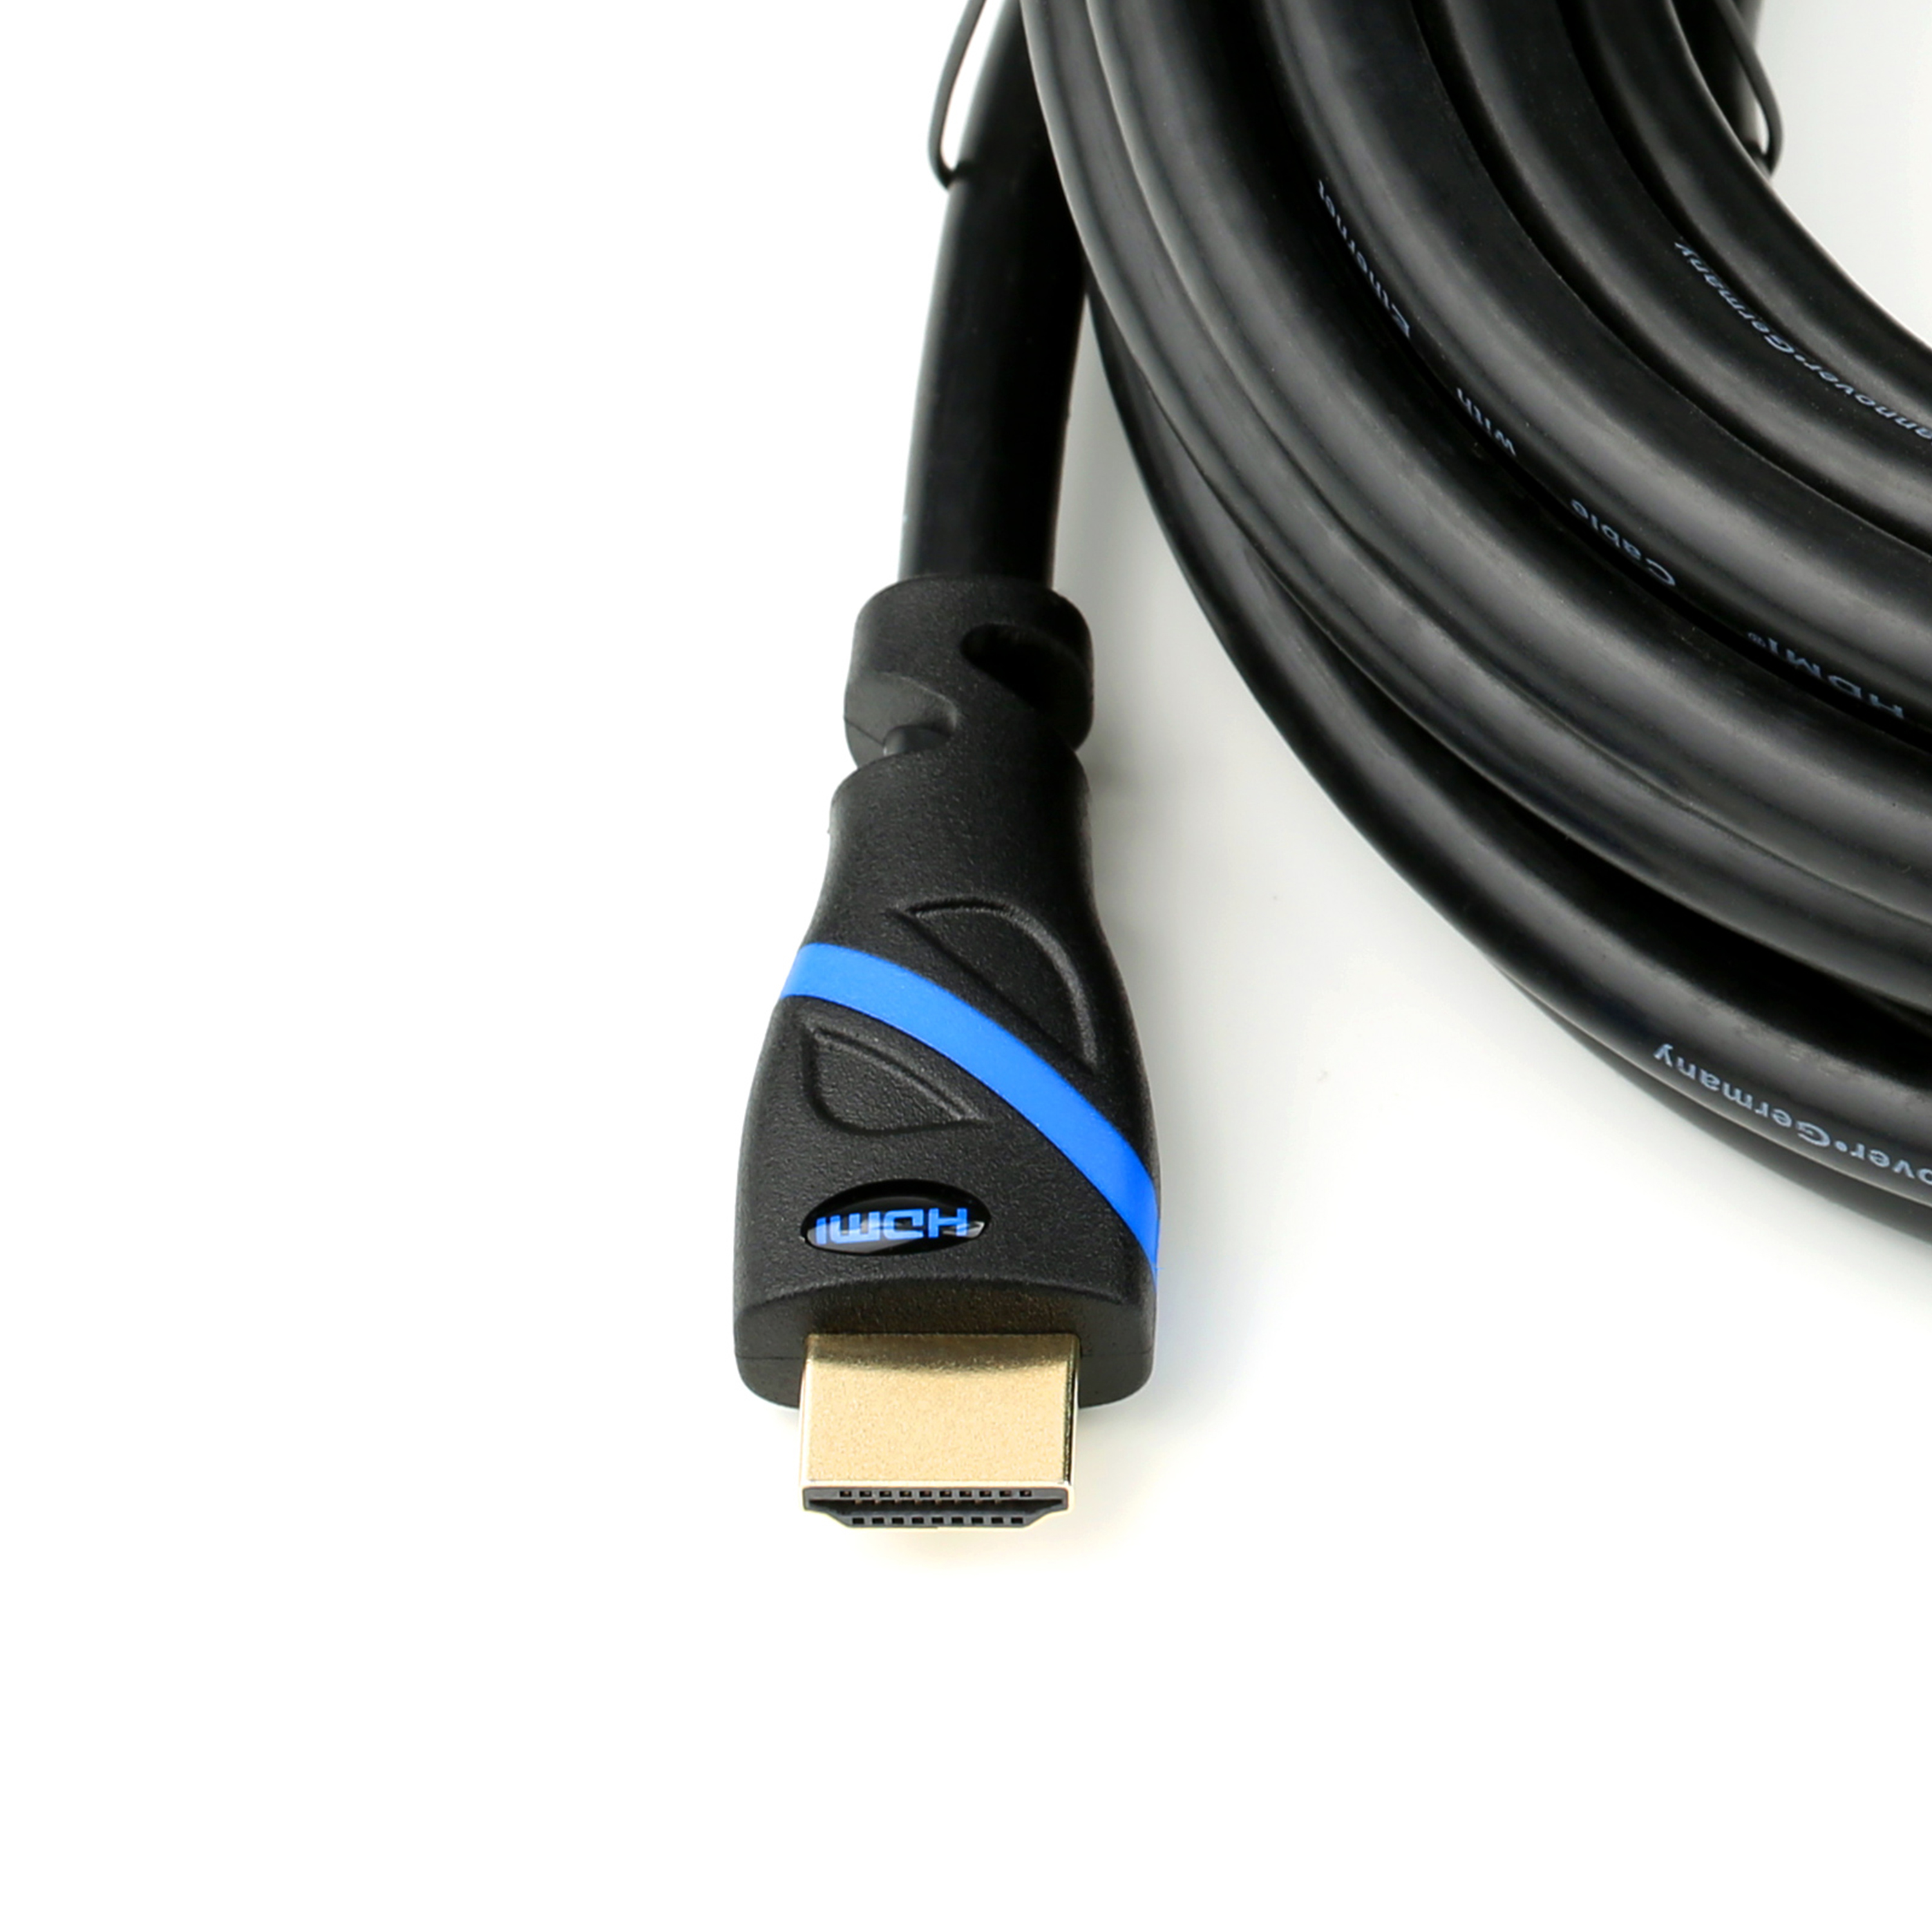 Kabel, CSL HDMI 2.0 HDMI 1,5m weiß/blau Kabel,